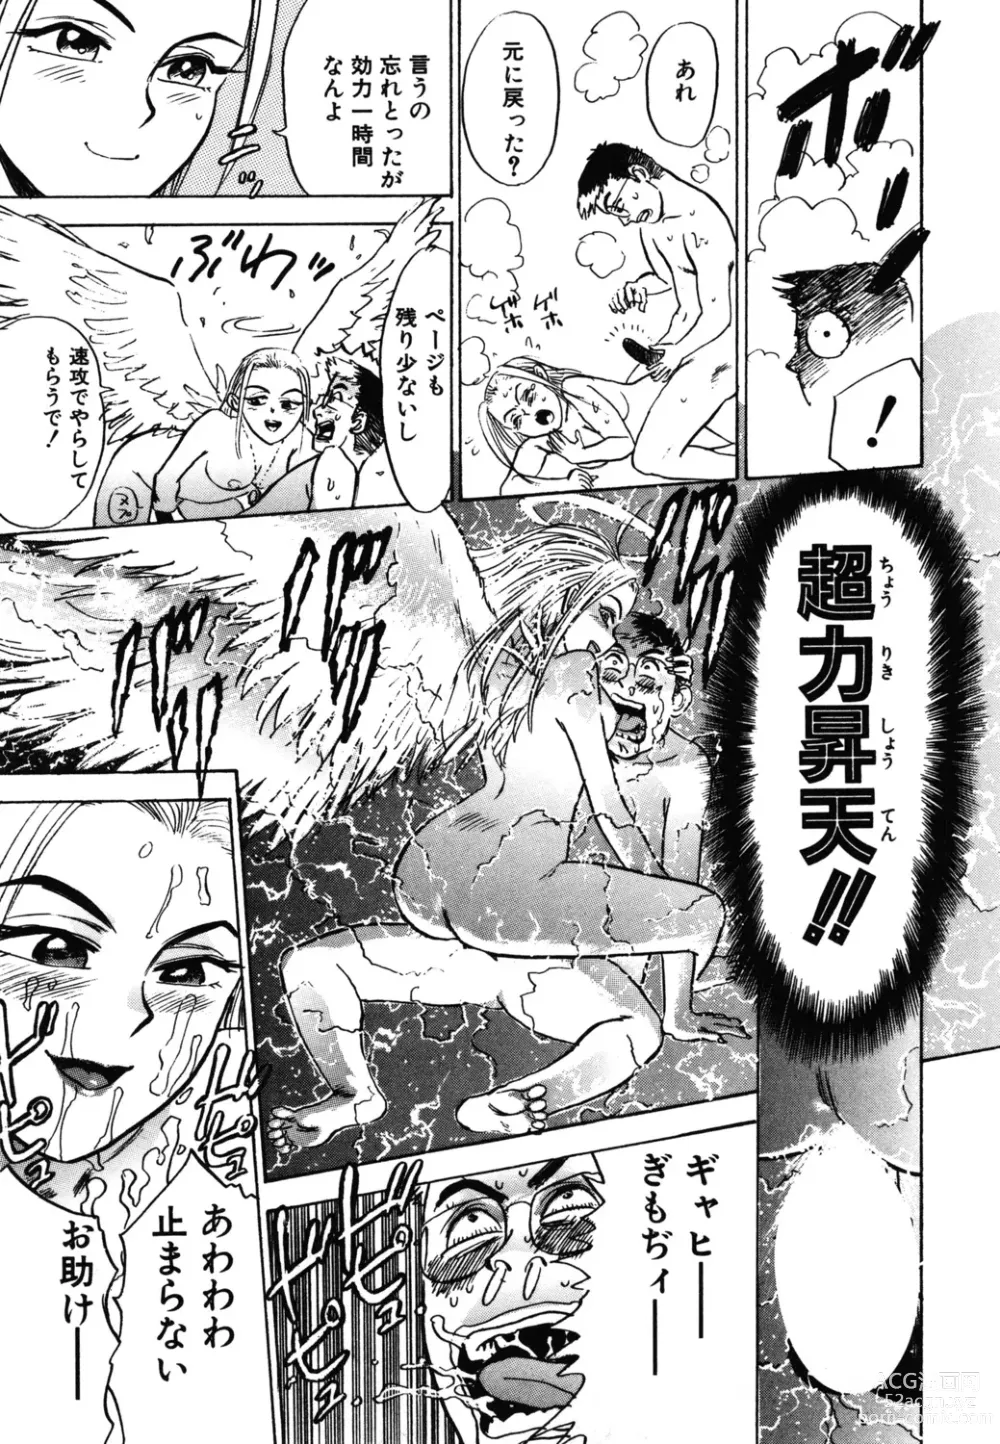 Page 175 of manga Abunai Reiko Sensei 1